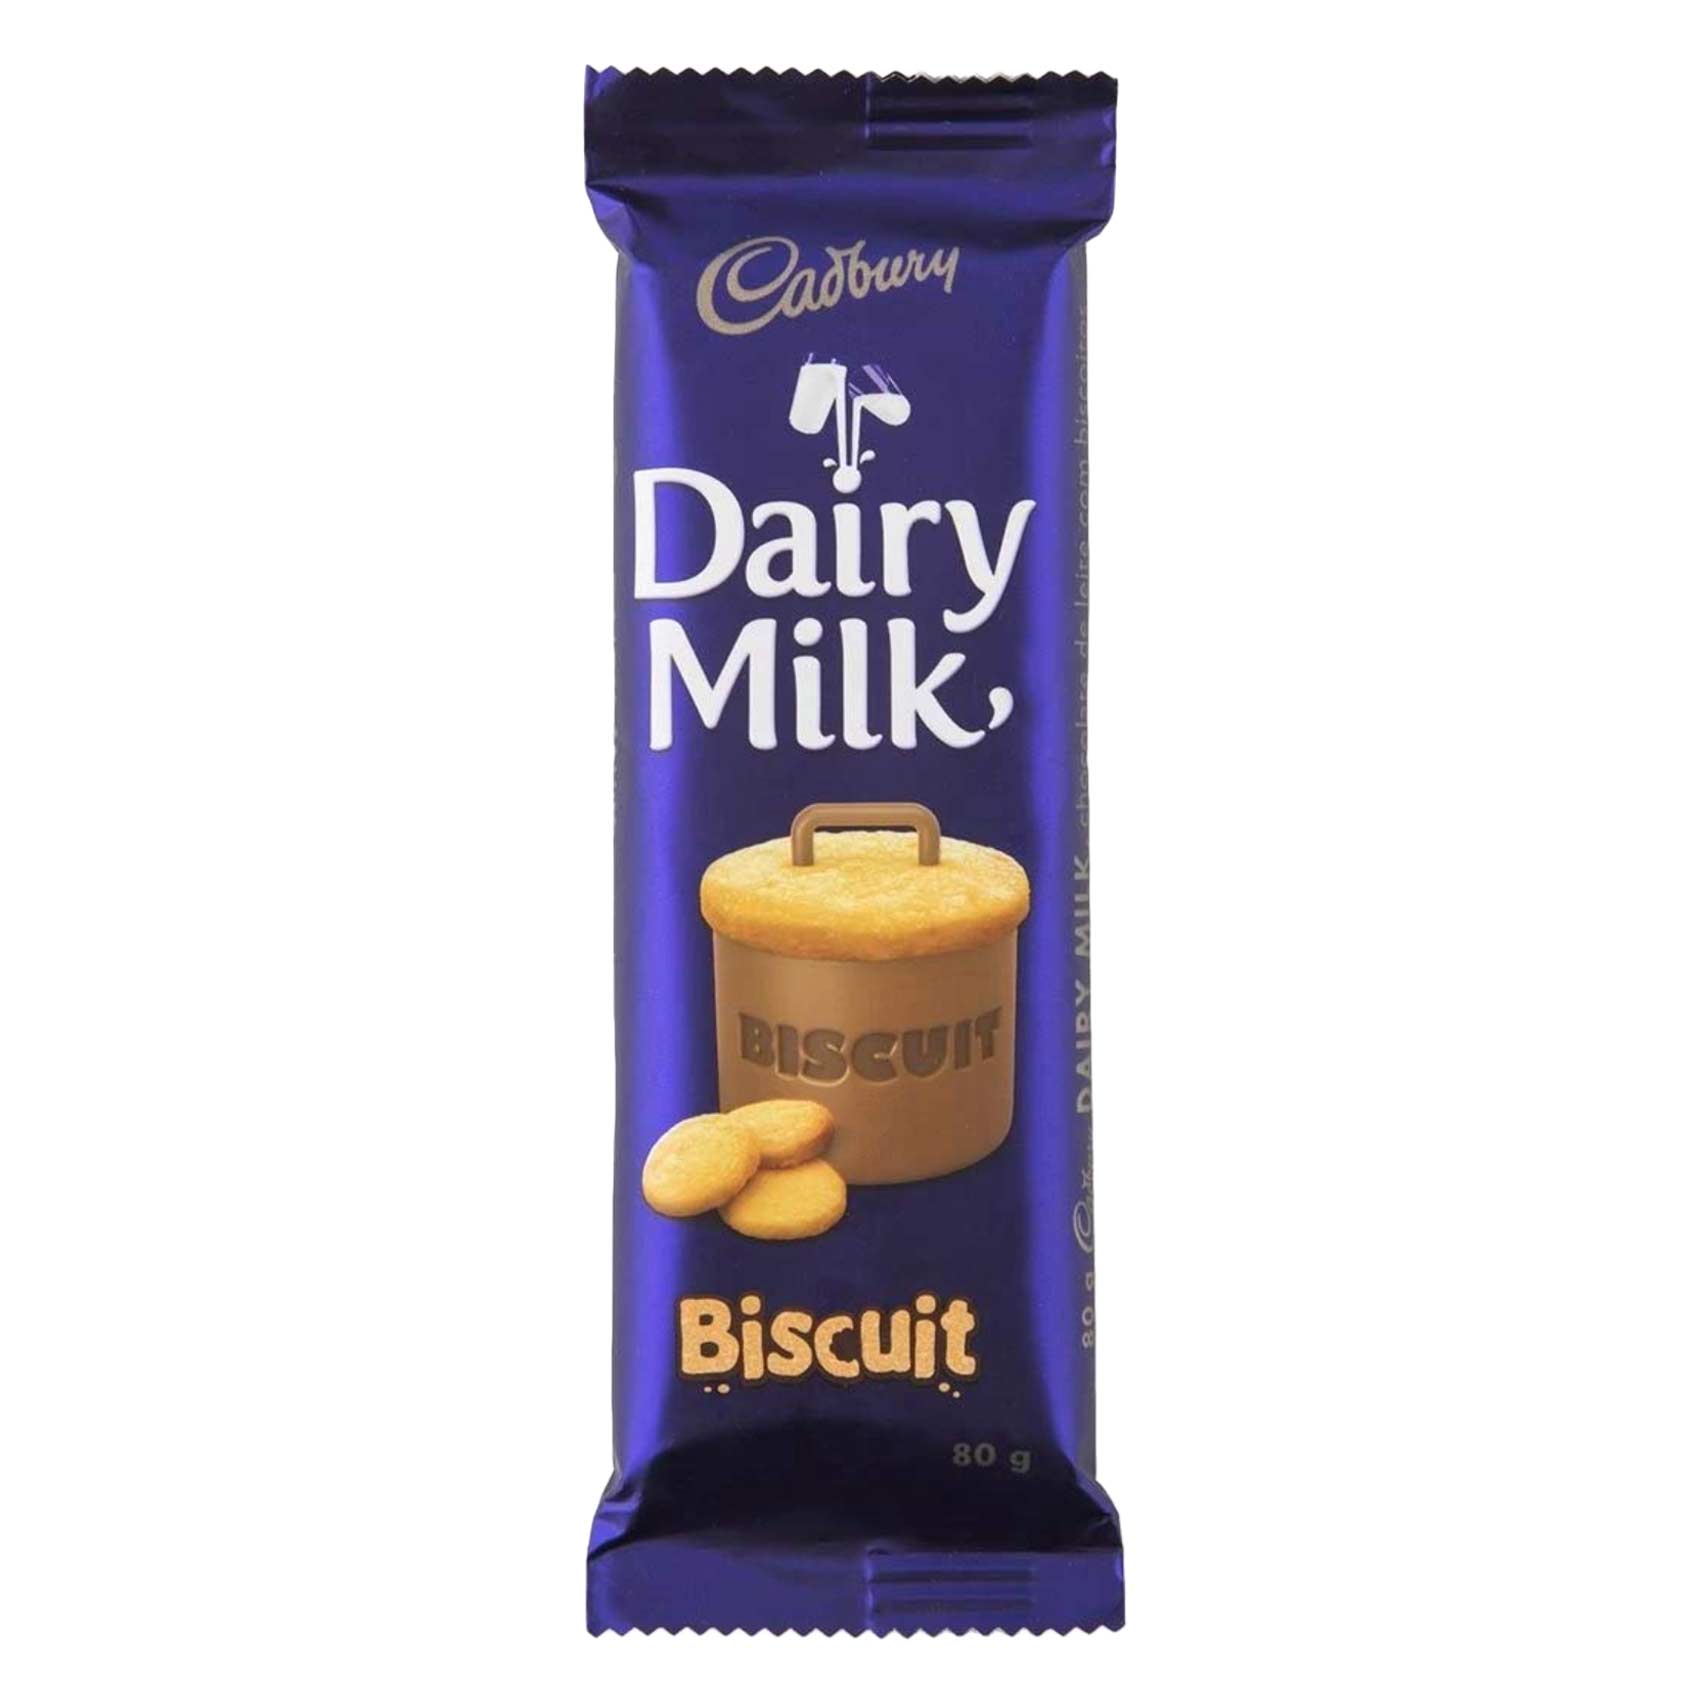 Cadbury Dairy Milk Biscuit Chocolate Bar 80g